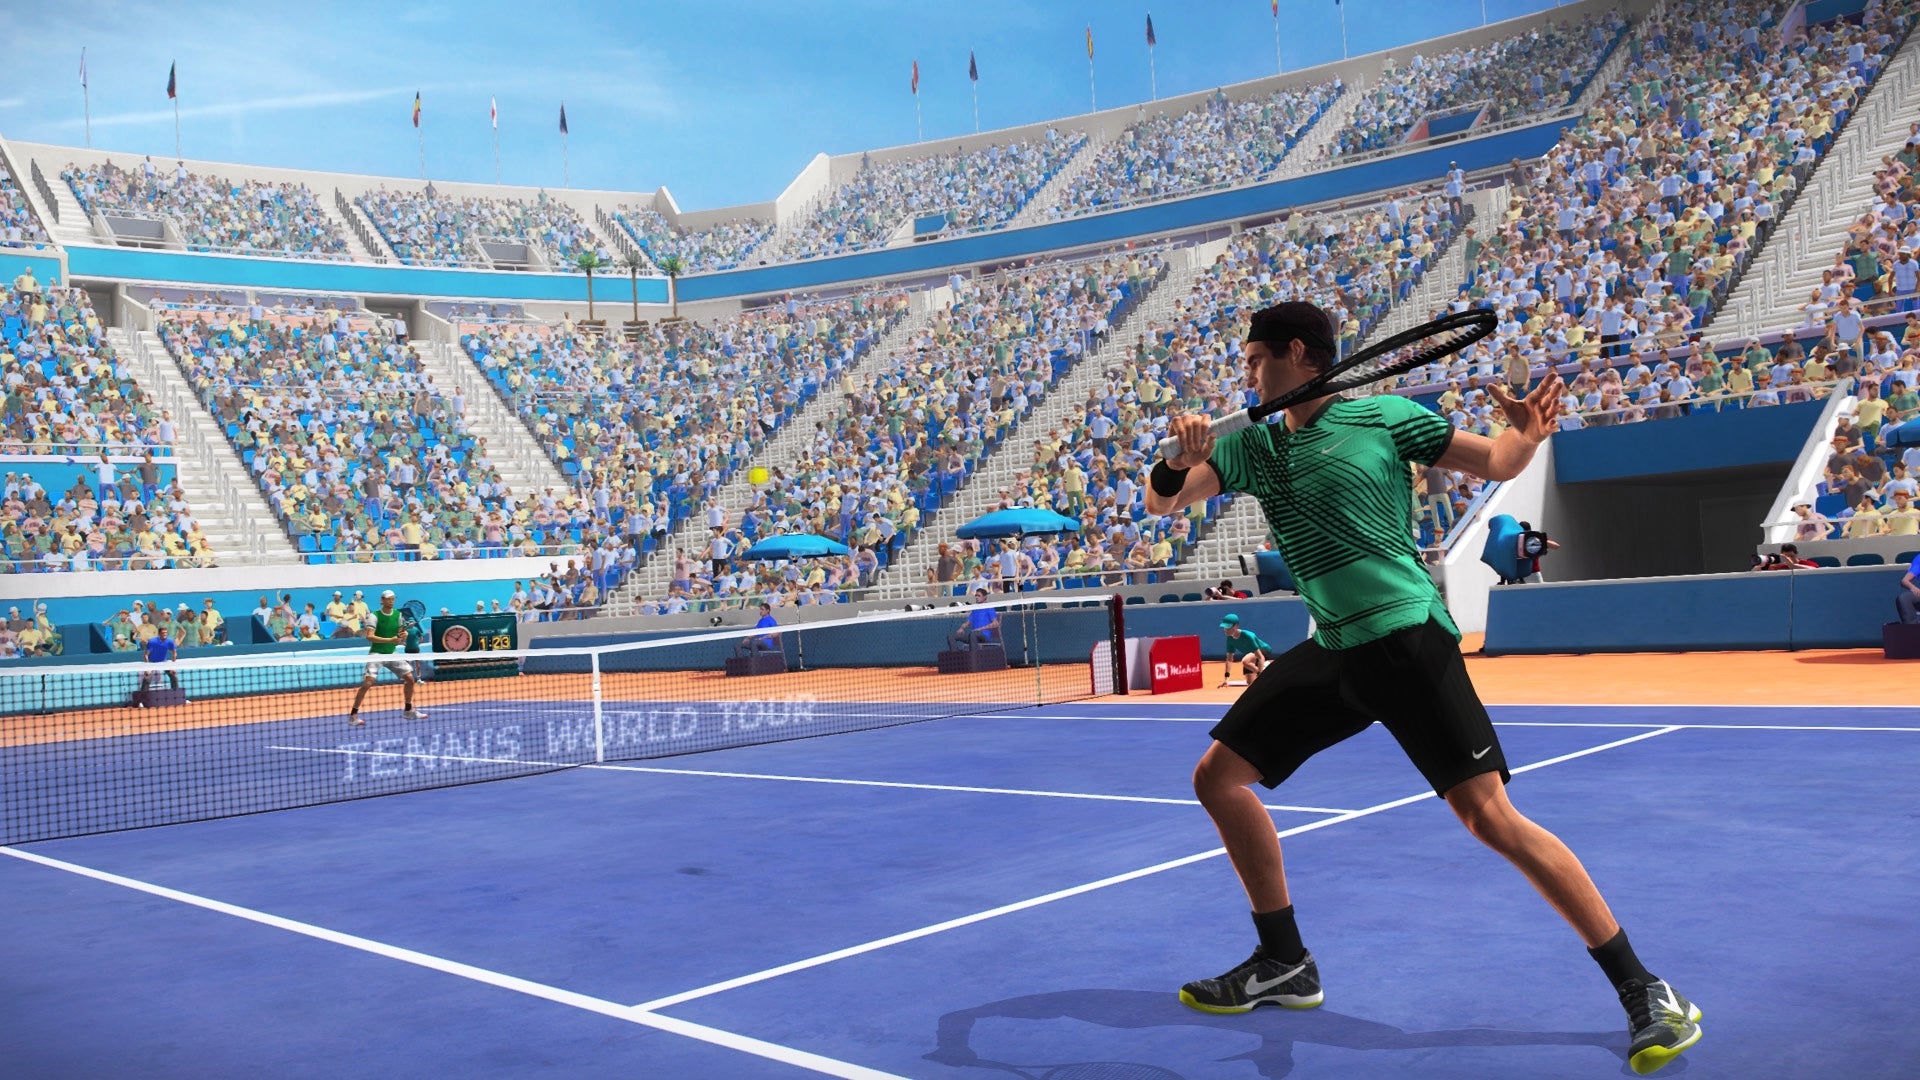 Immagine di Un nuovo video gameplay di Tennis World Tour mostra un match tra John McEnroe e Andre Agassi